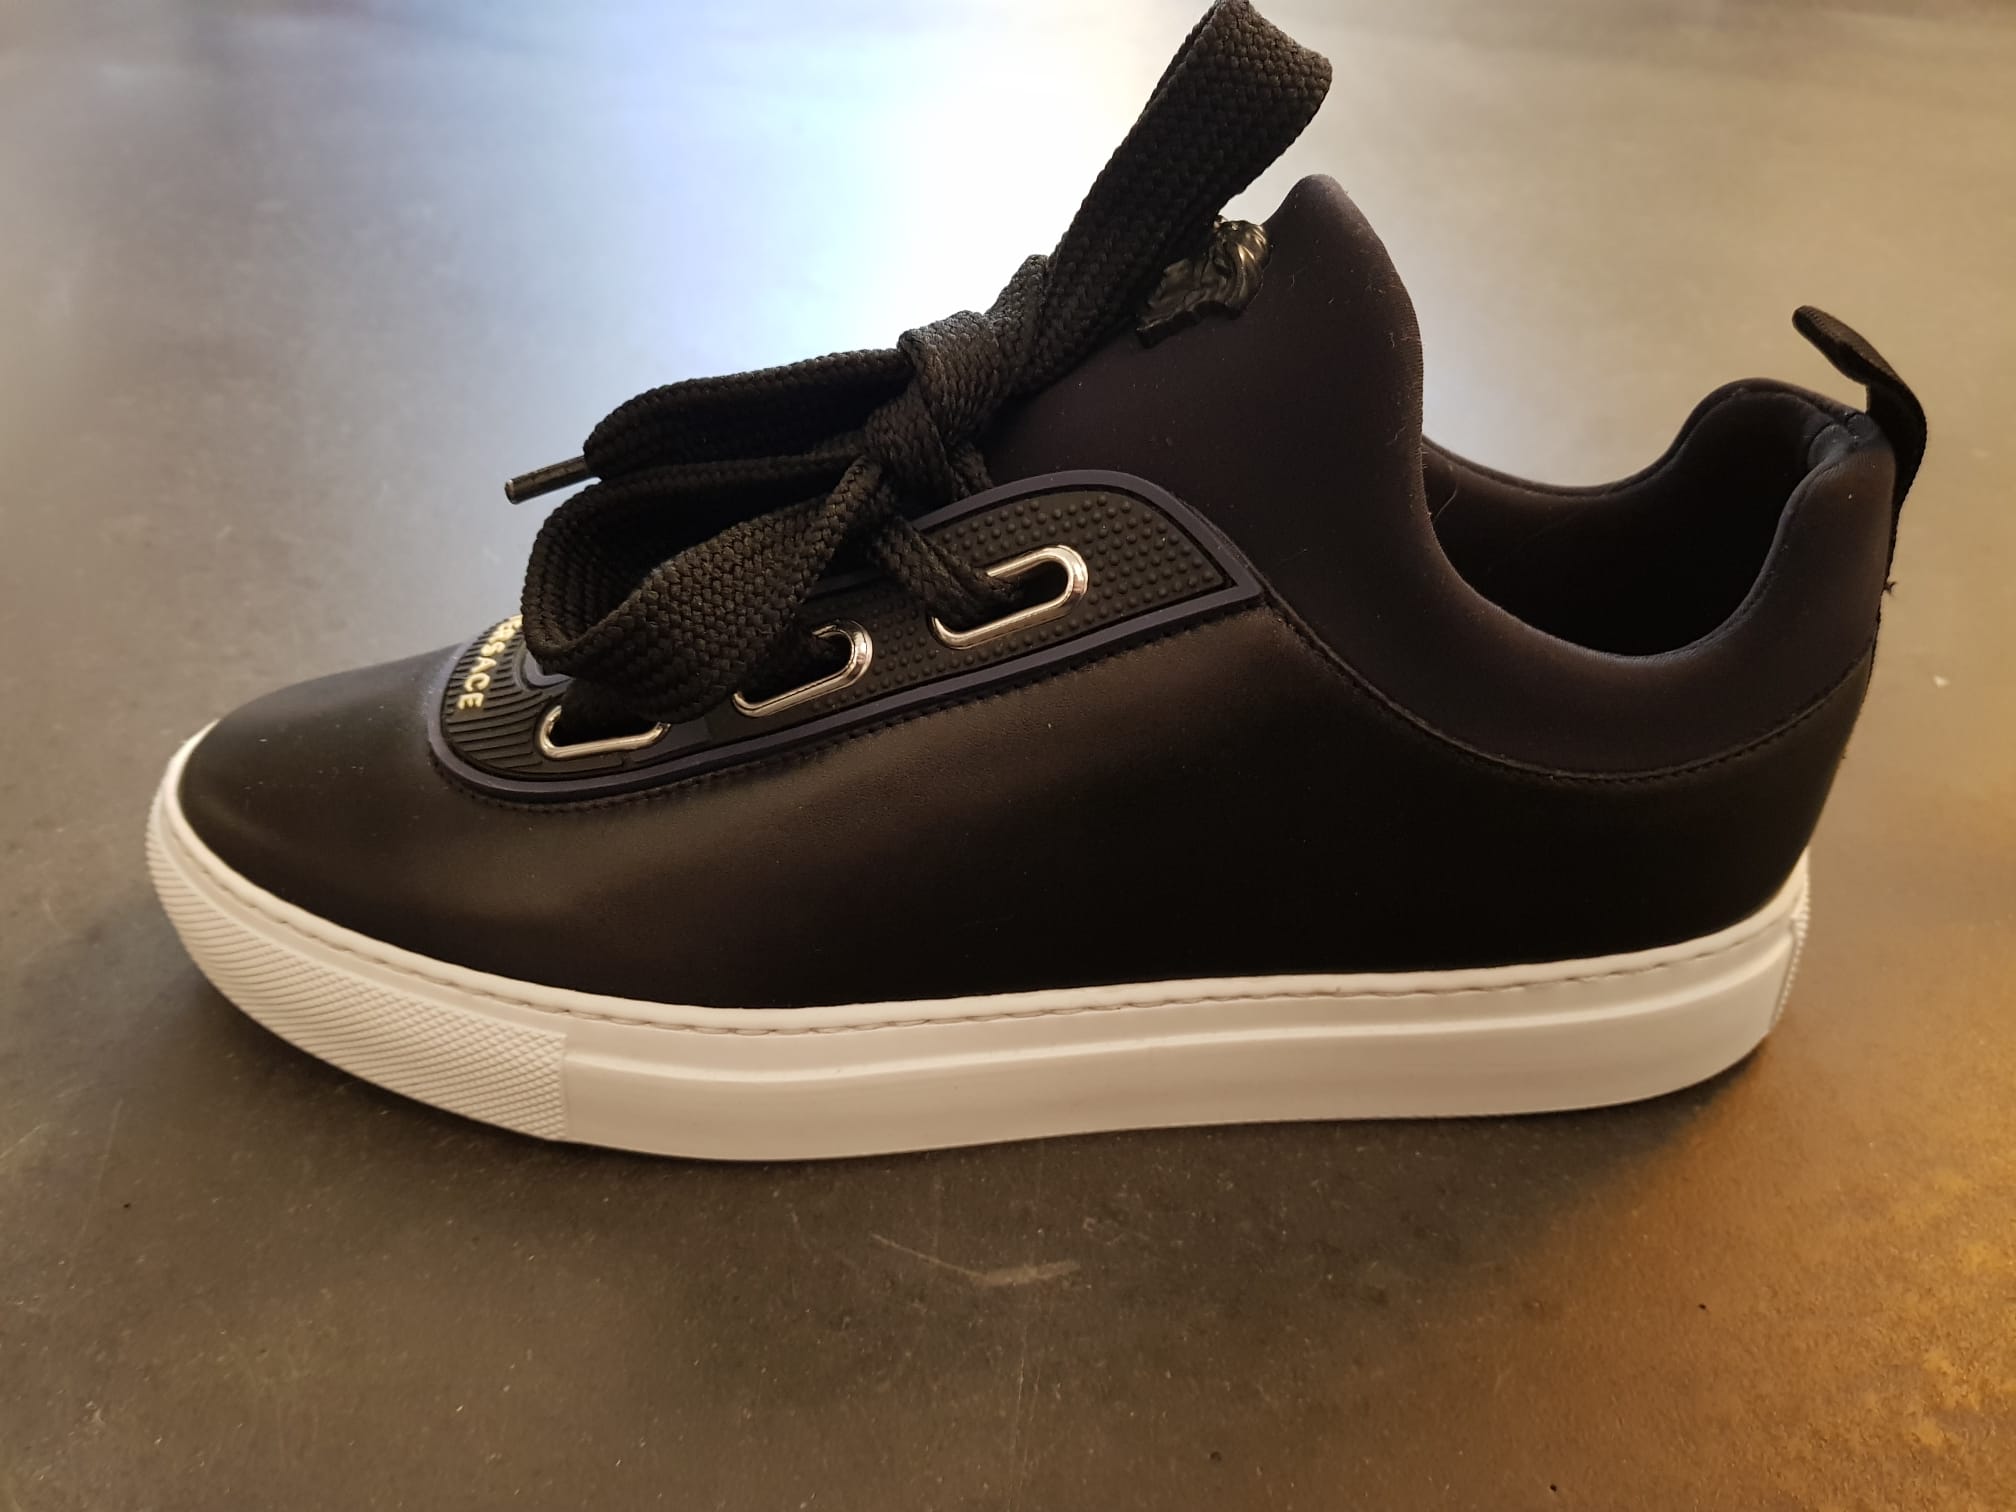 Versace - Sneaker calf leather